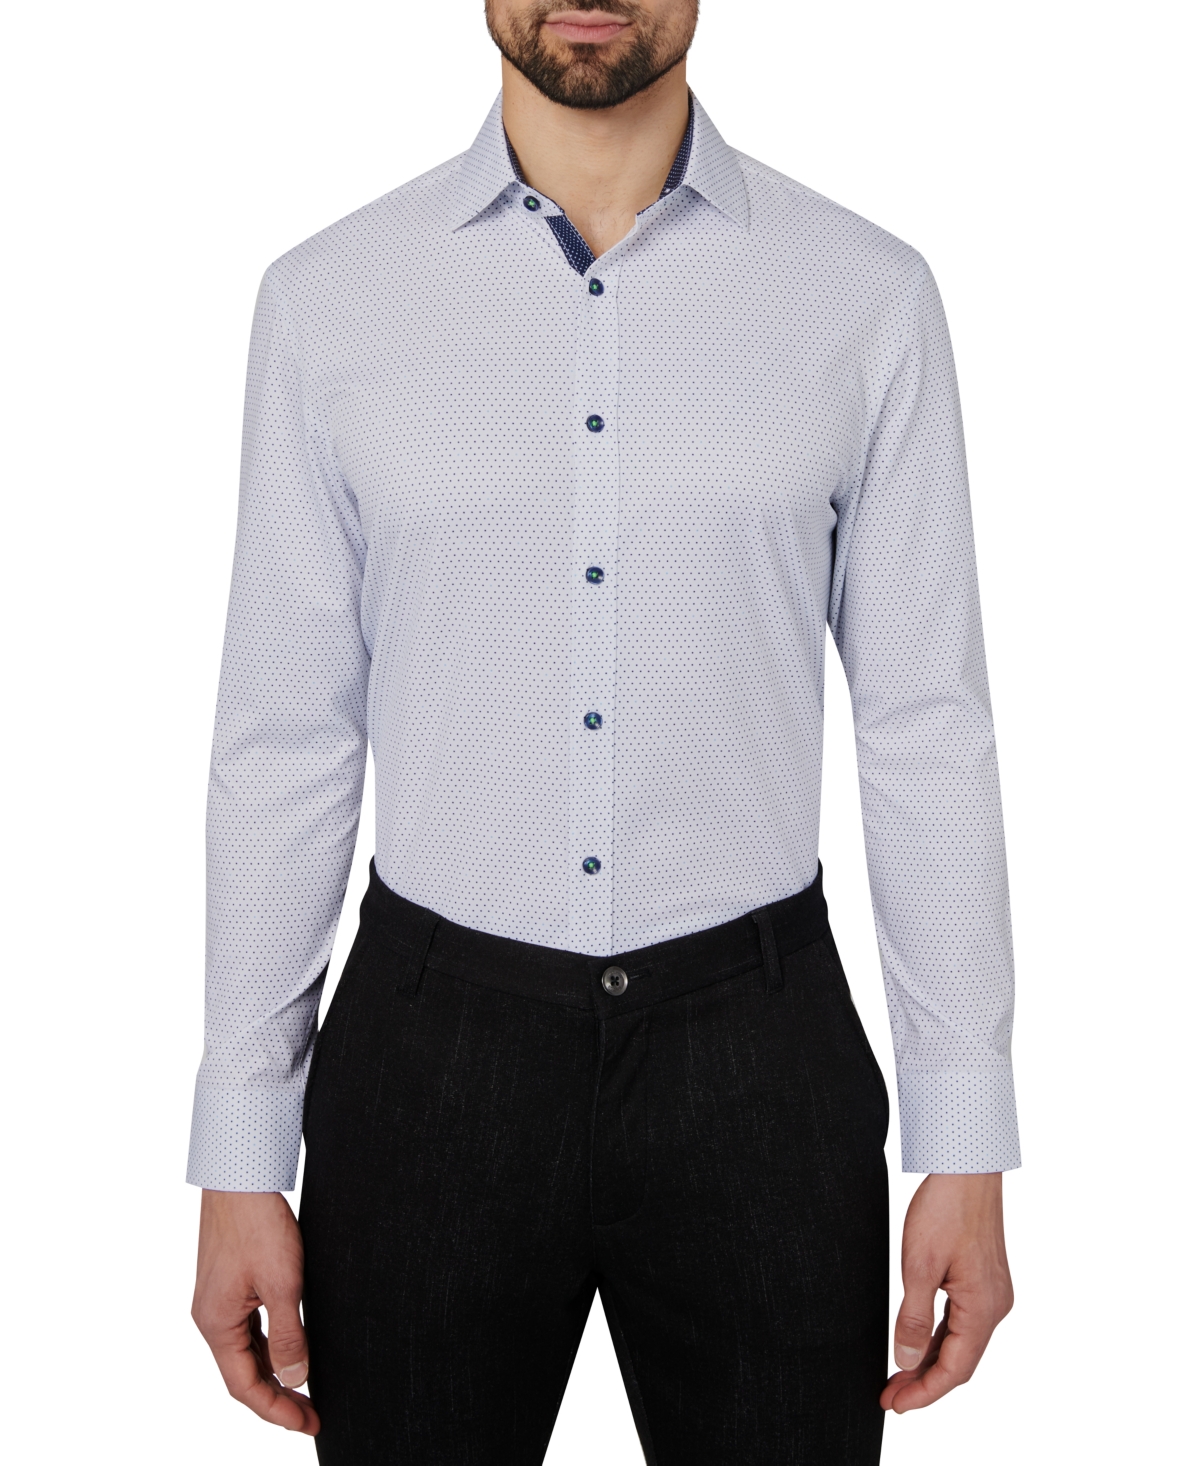 Men's Slim Fit Non-Iron Dot Print Performance Dress Shirt - Navy